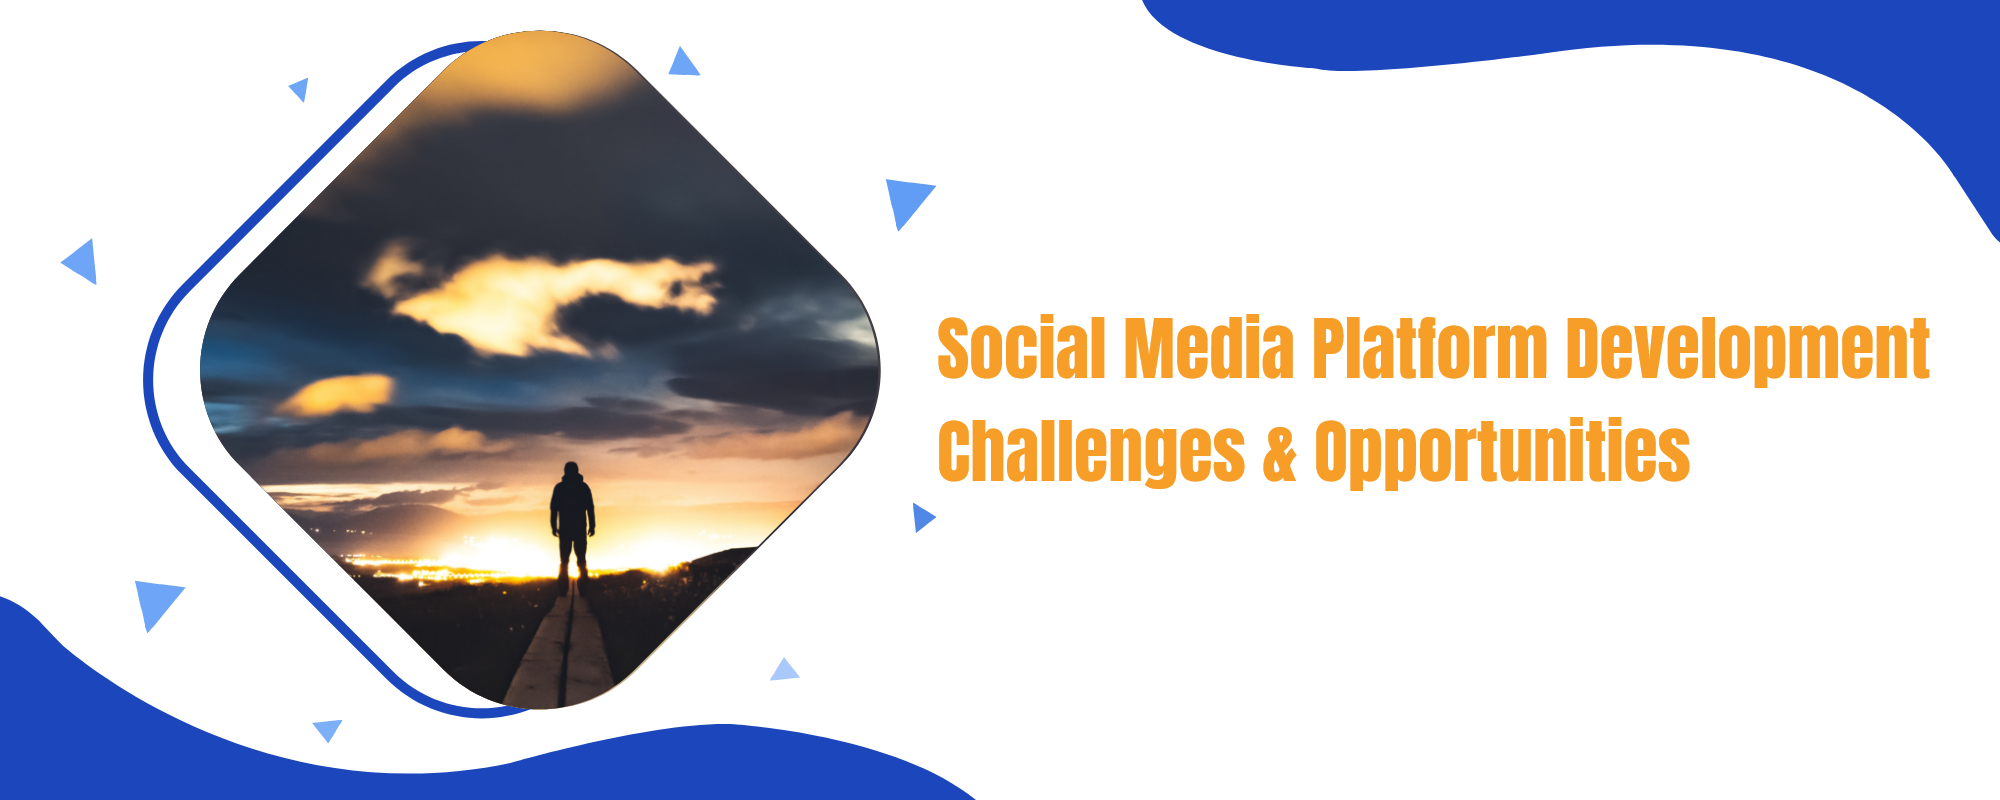 Social media platform development challenges